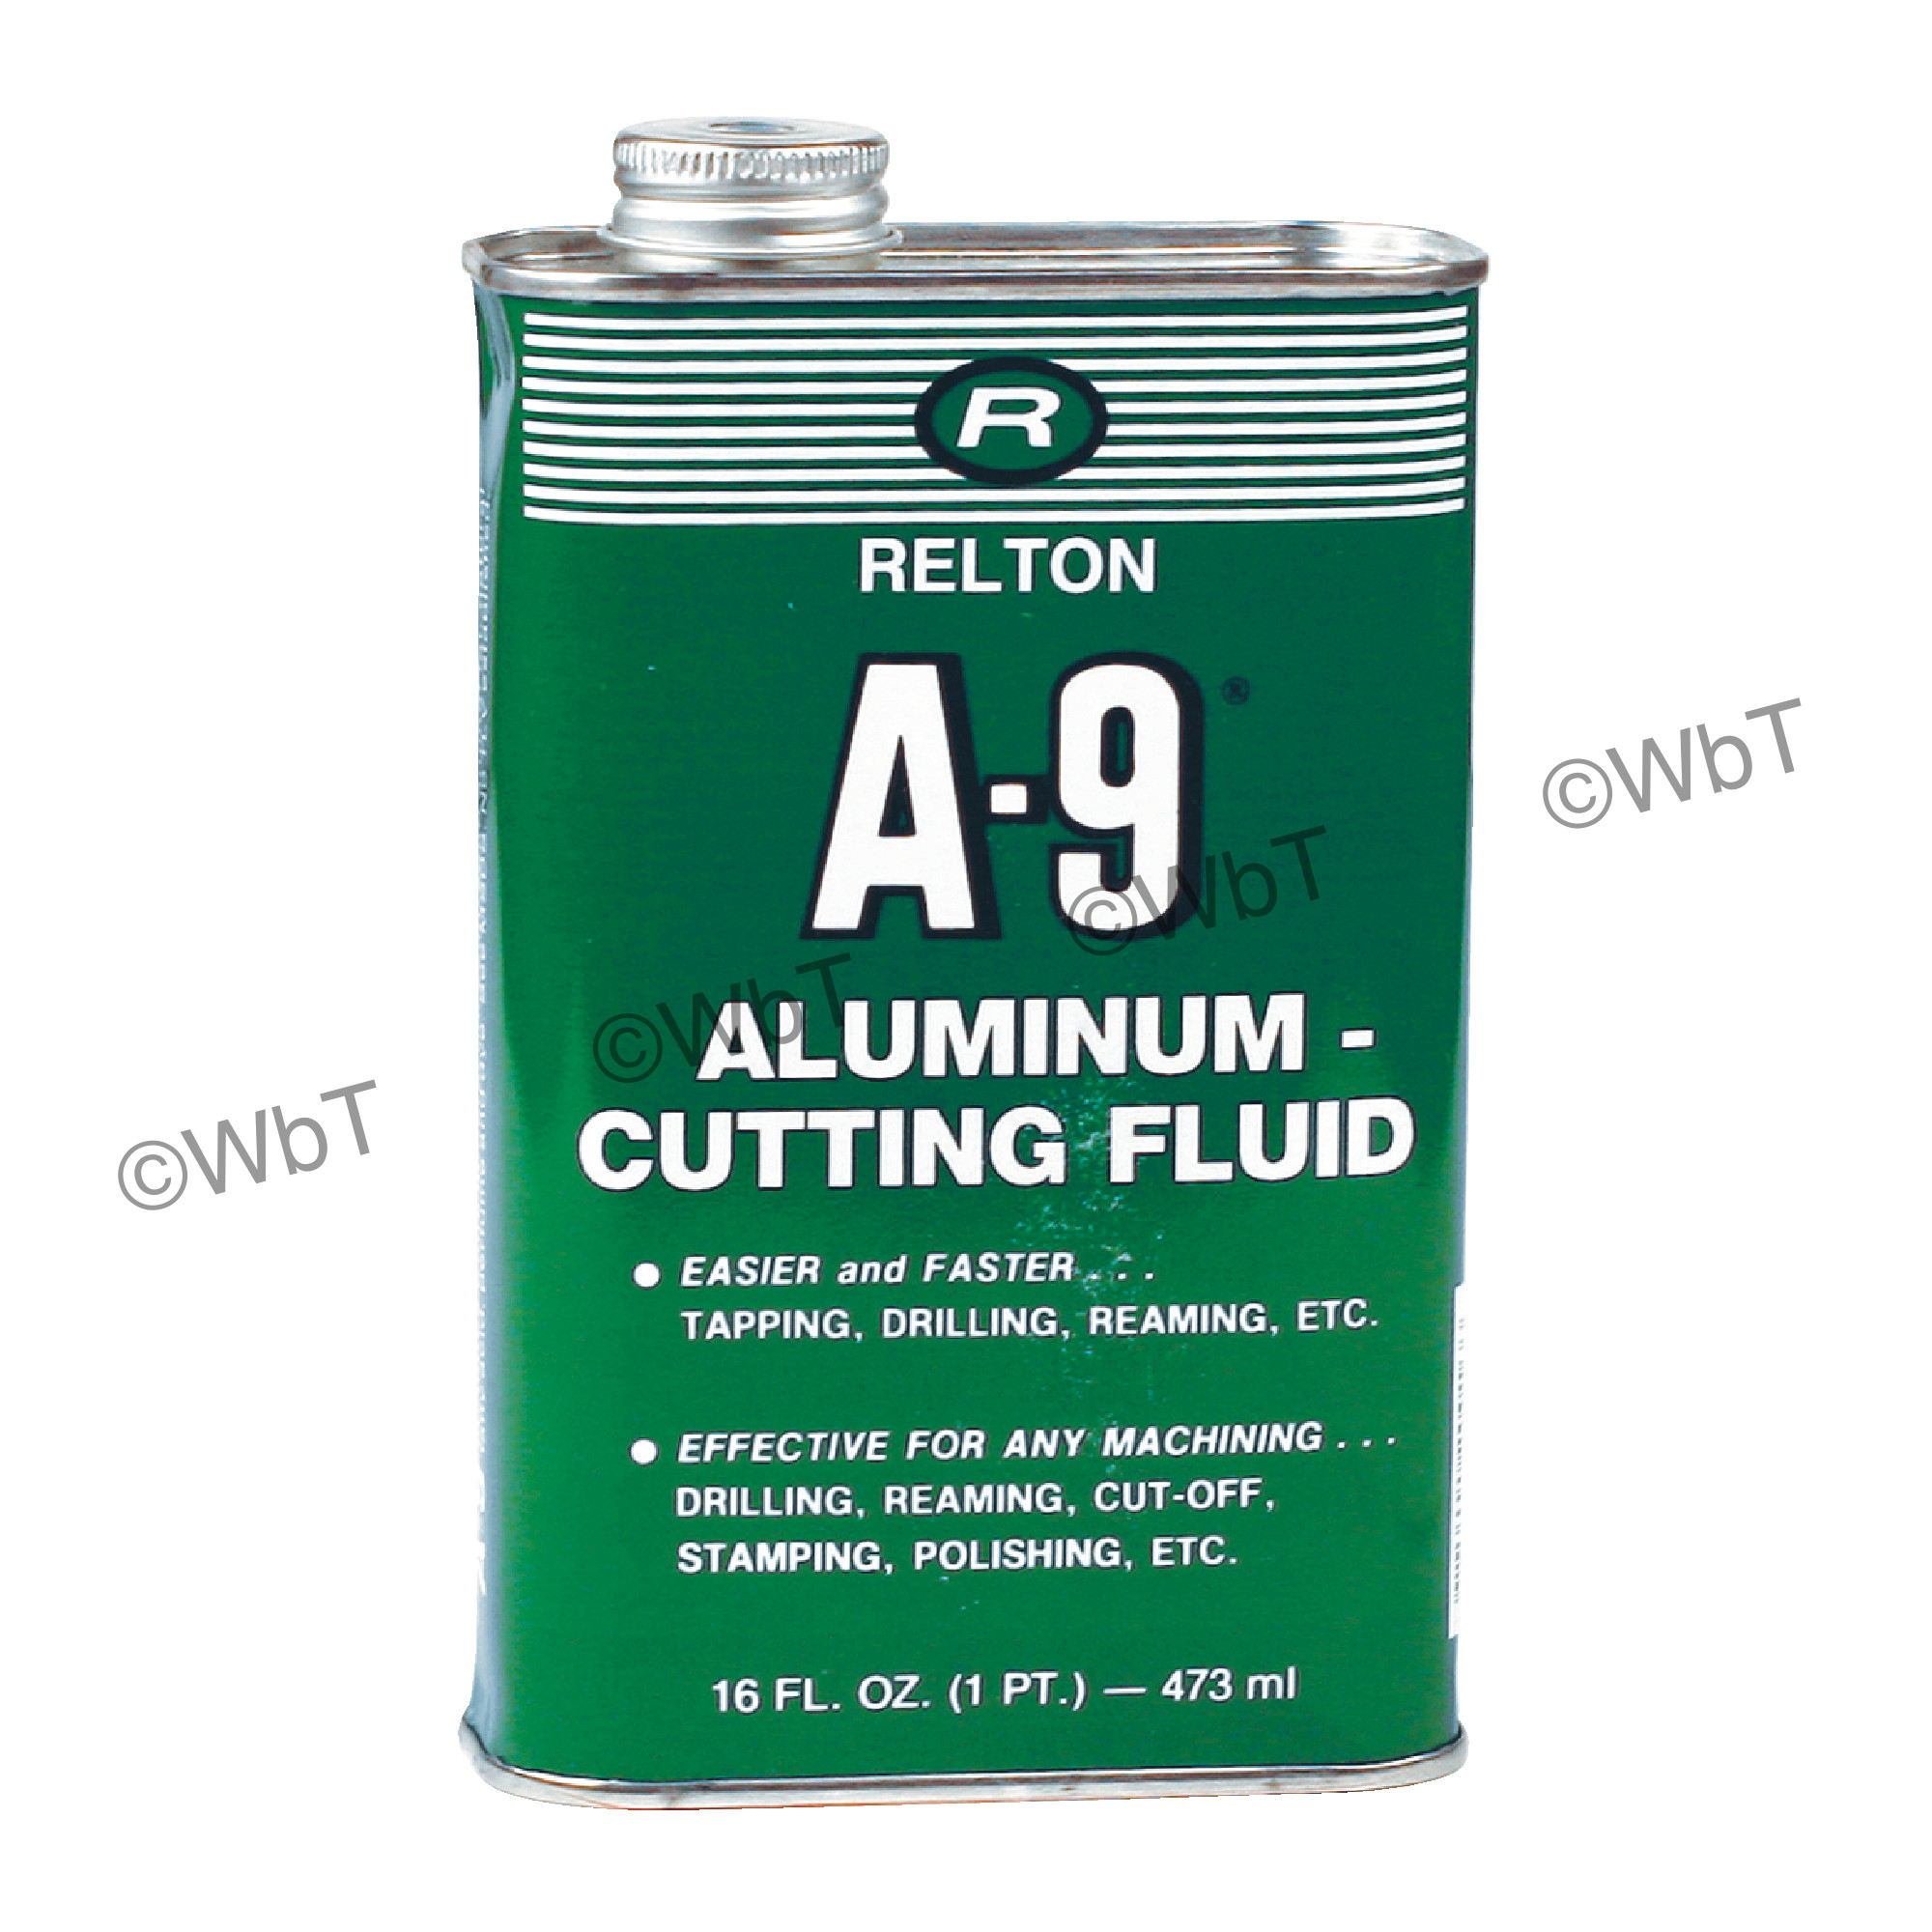 A-9 Aluminum Cutting Fluid